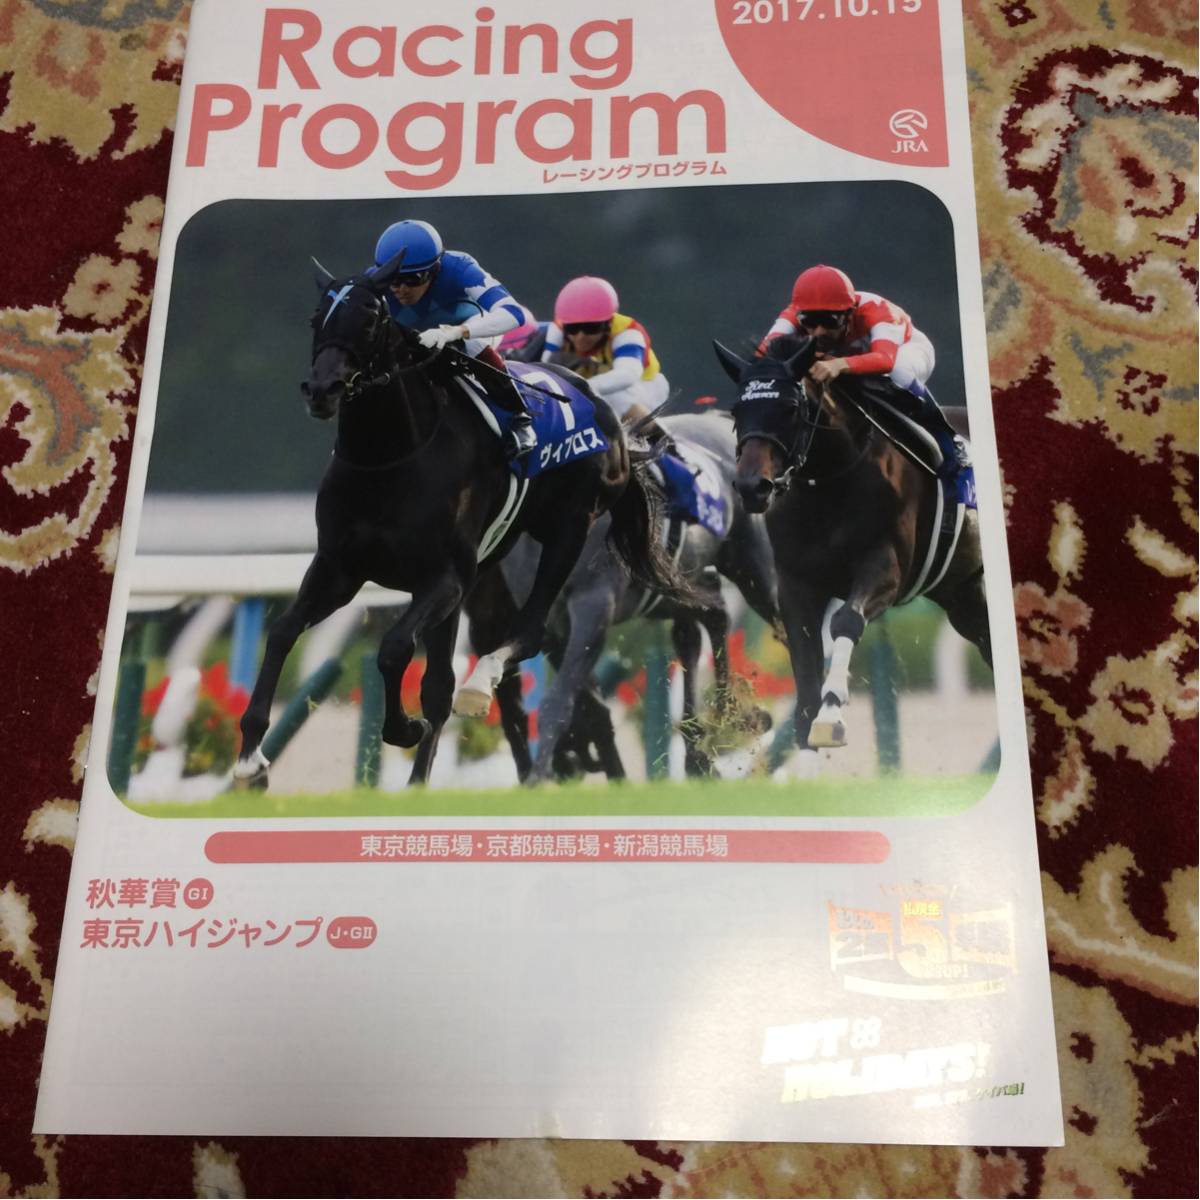 JRA Racing Program 2017.10.15, Tokyo horse racing place * Kyoto horse racing place * Niigata horse racing place, autumn ..(GⅠ), Tokyo high Jump (J*GⅡ)